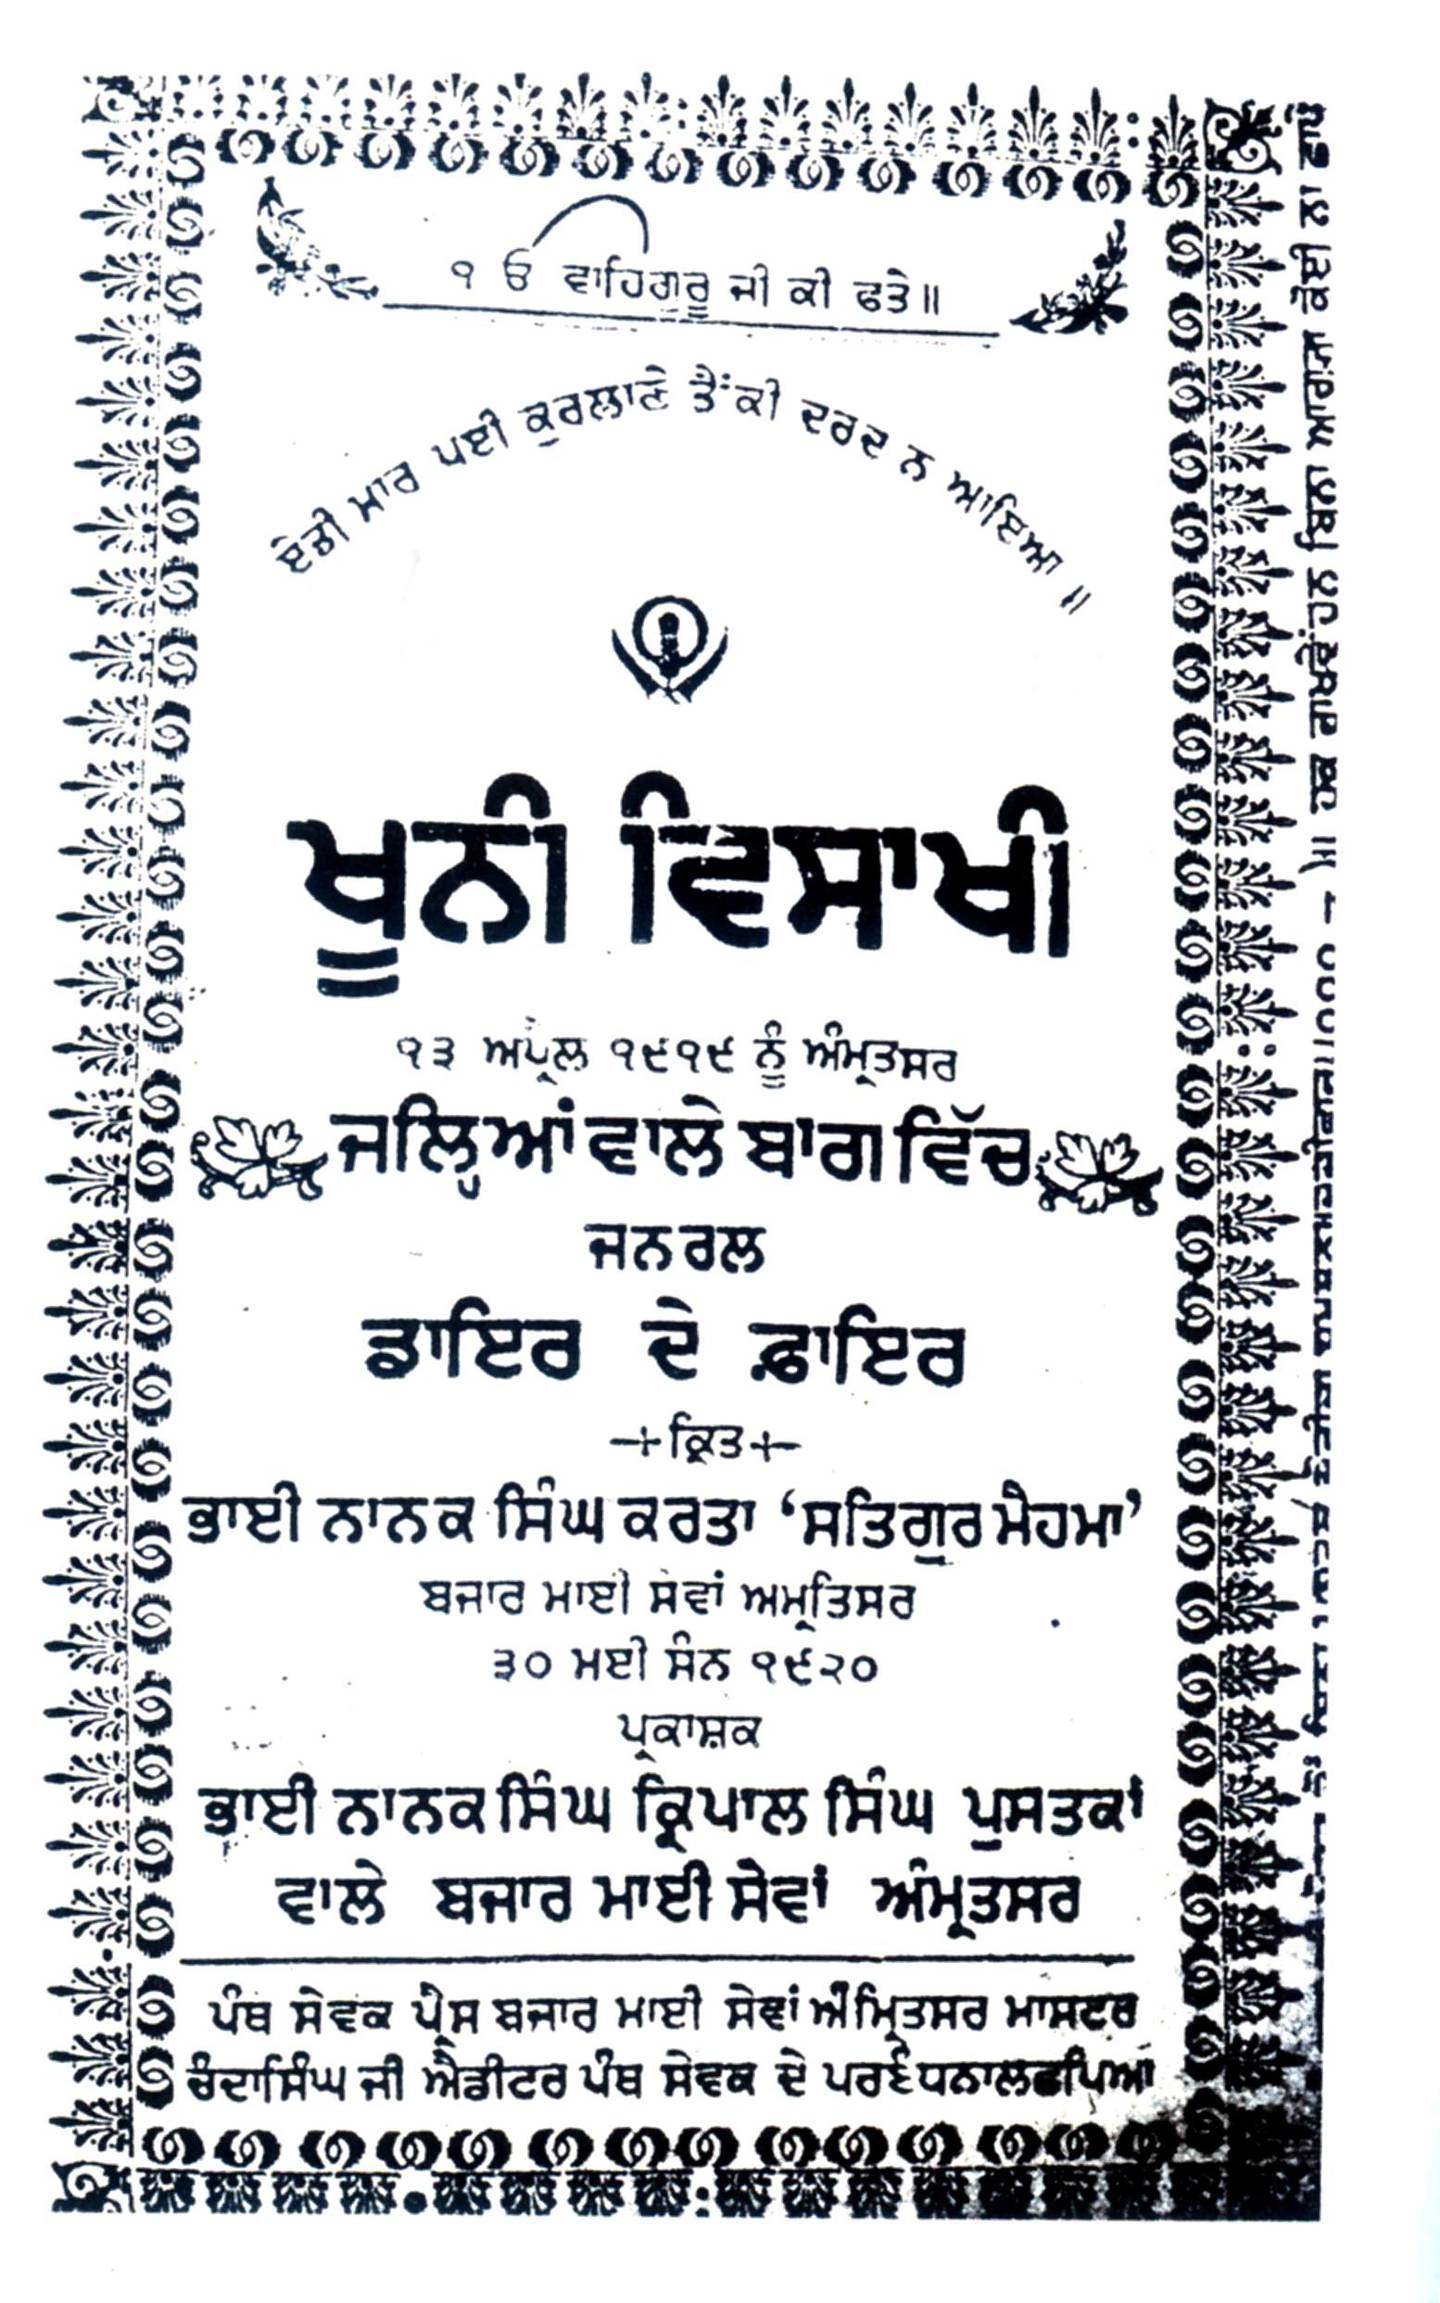 The original cover of Khooni Vaisakhi by Nanak Singh. Courtesy Navdeep Suri